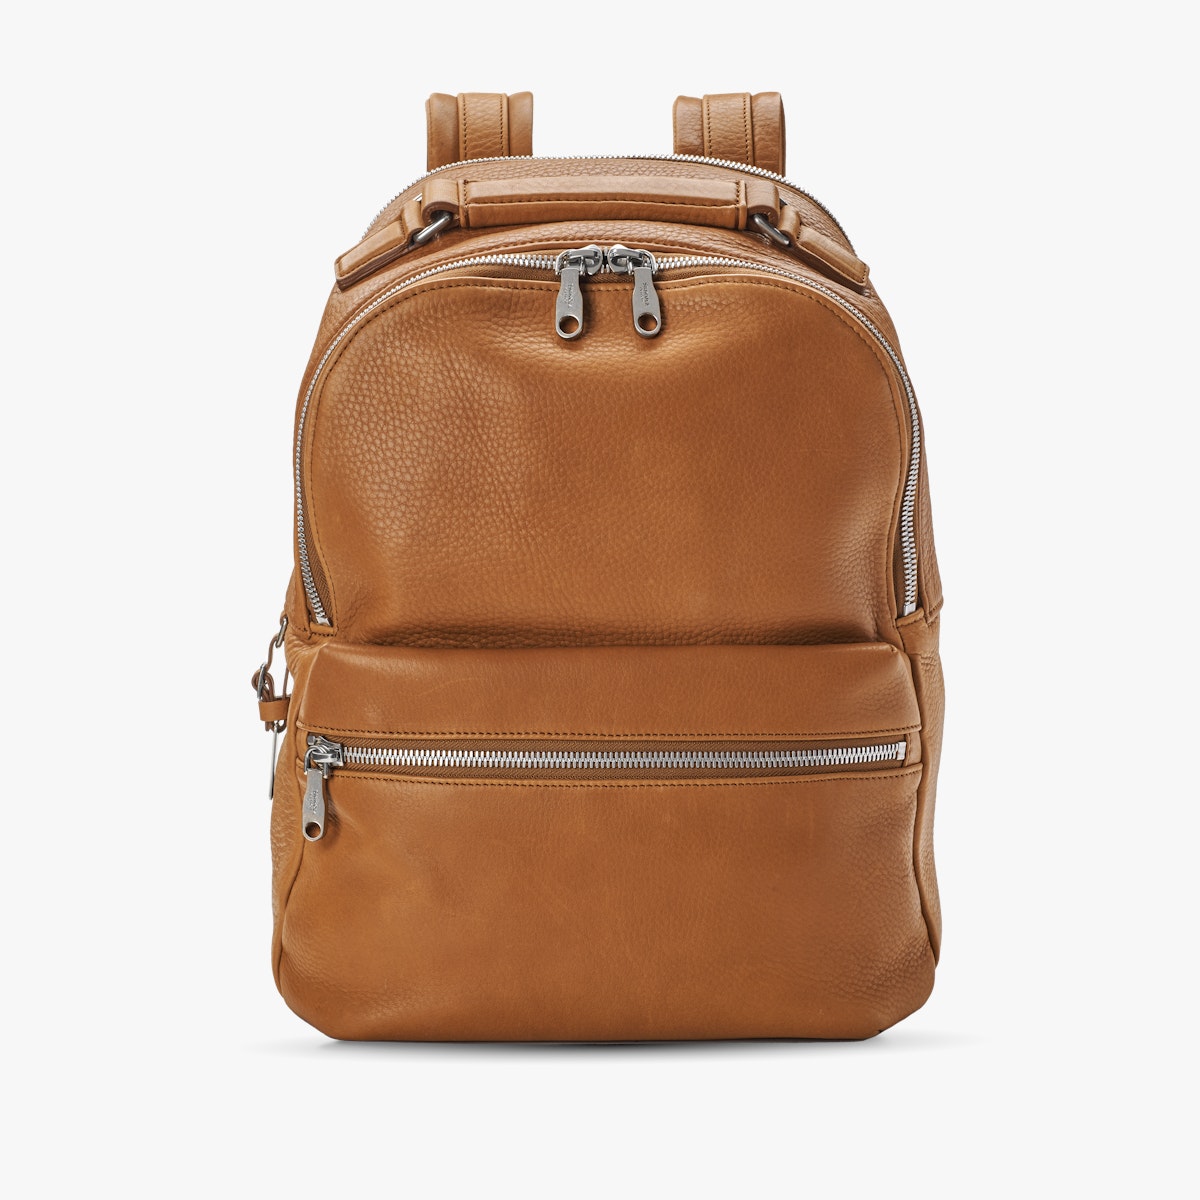 Apple Bags, Mini Zips, Clear Apple Bags, Apple Bag Colors